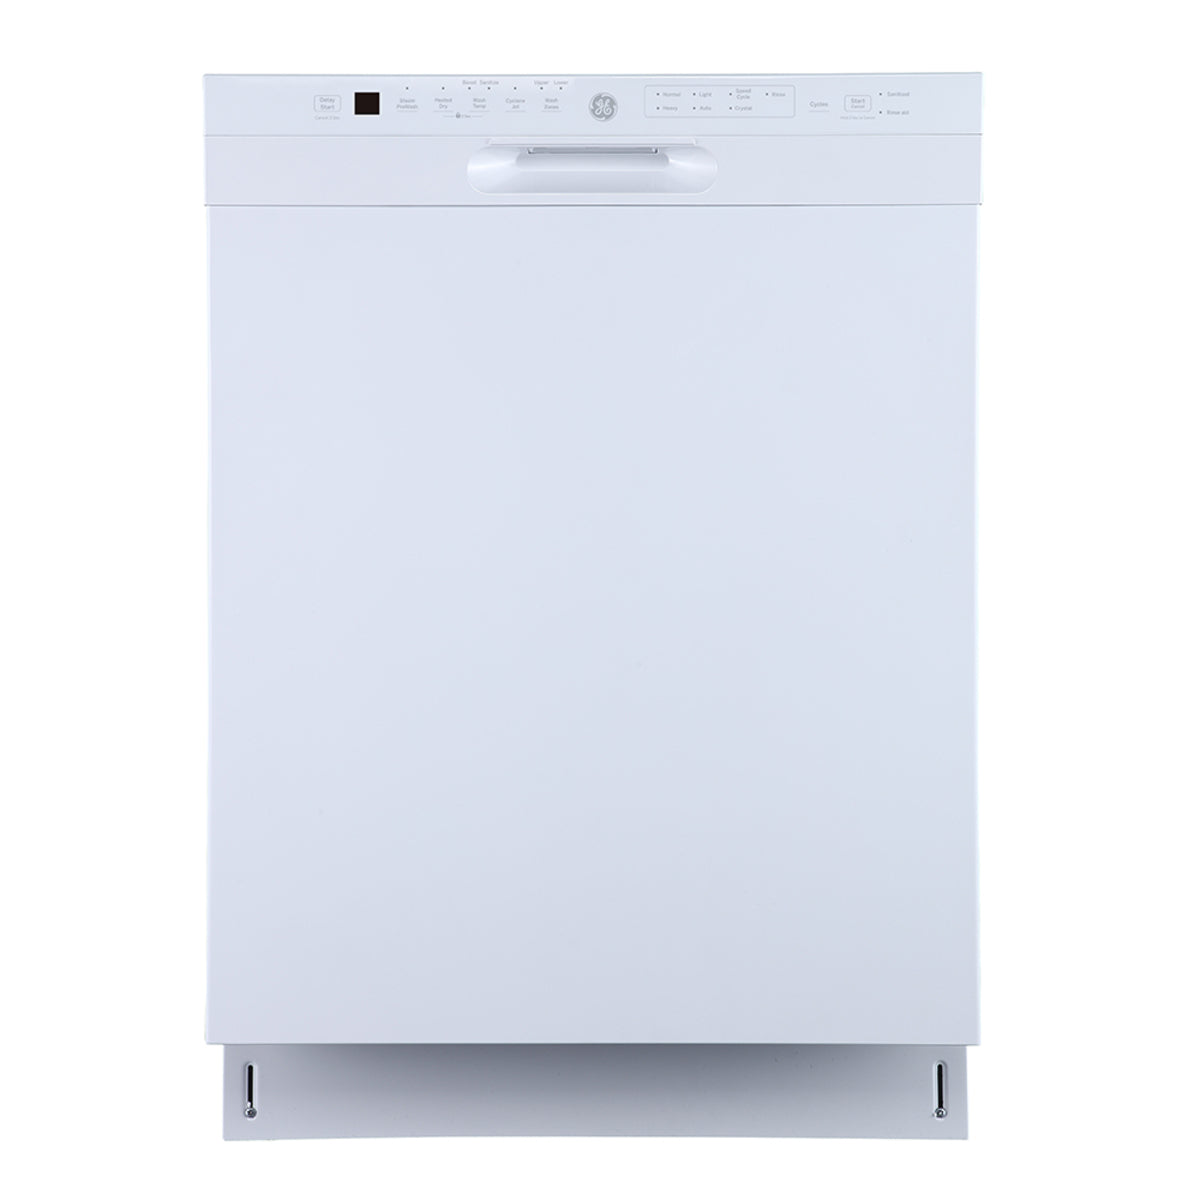 GE - 48 dBA Built In Dishwasher in White - GBF655SGPWW